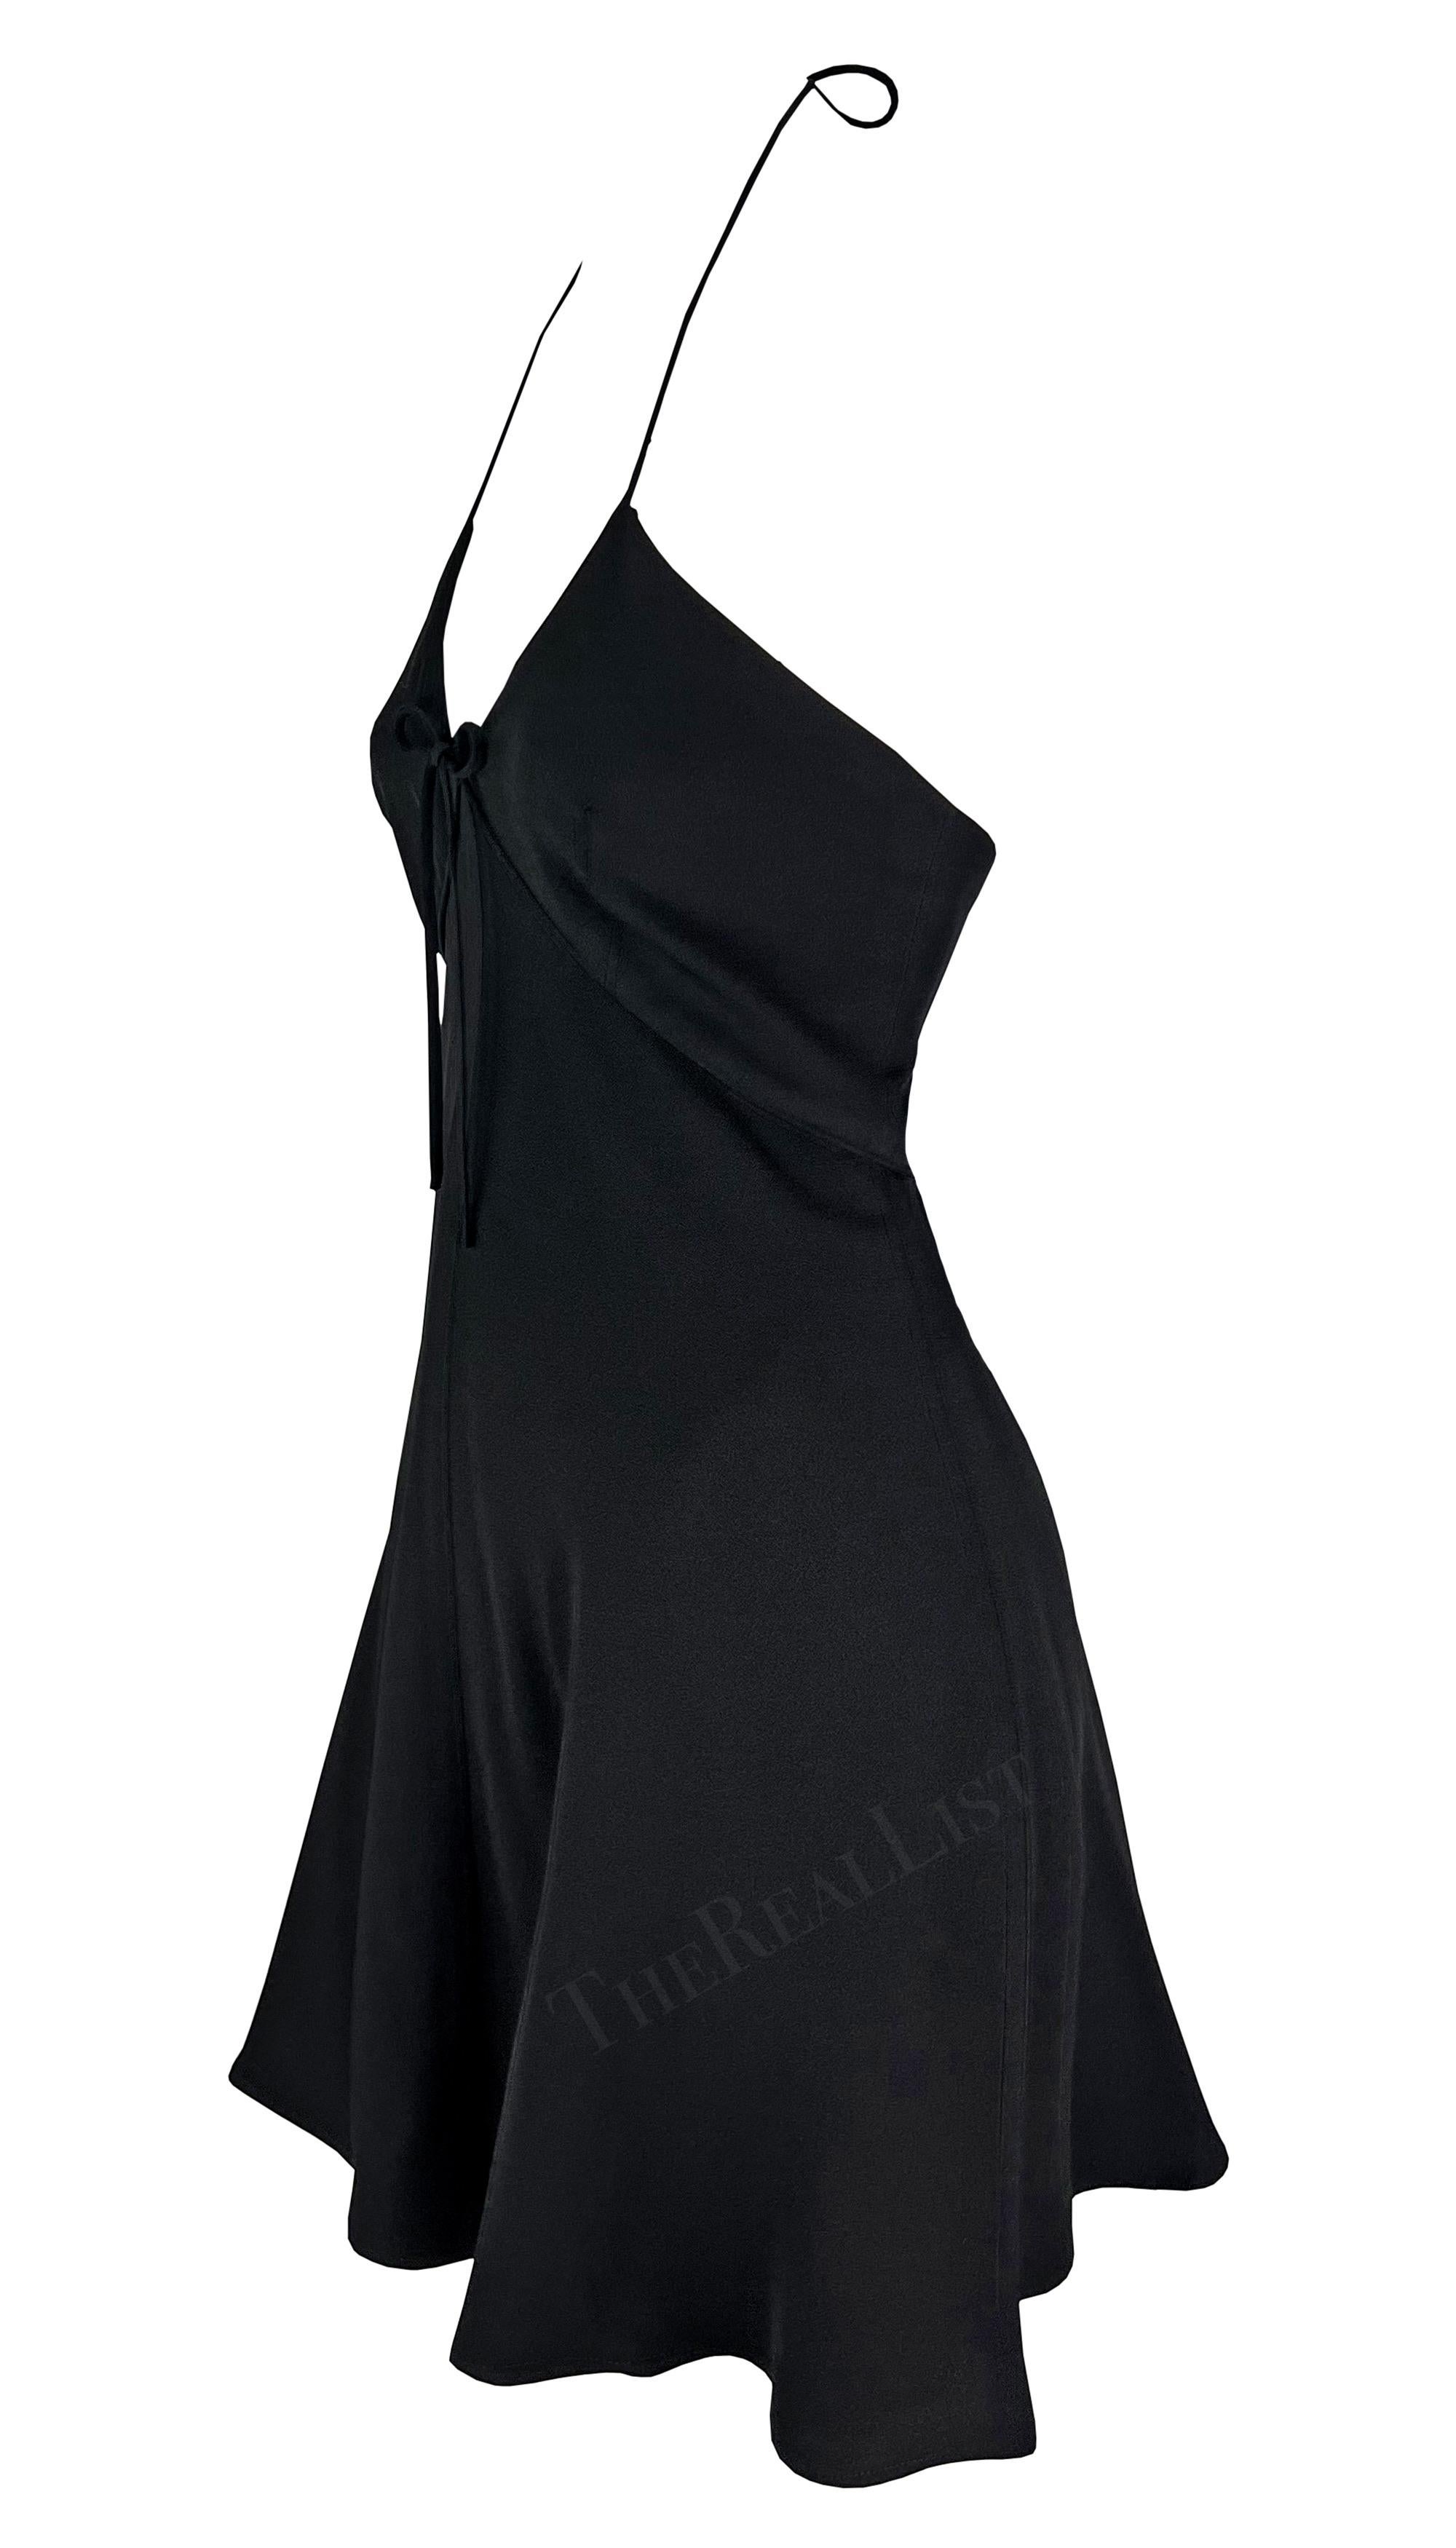 S/S 1995 Dolce & Gabbana Black Bow Halterneck Flare Mini Dress For Sale 2